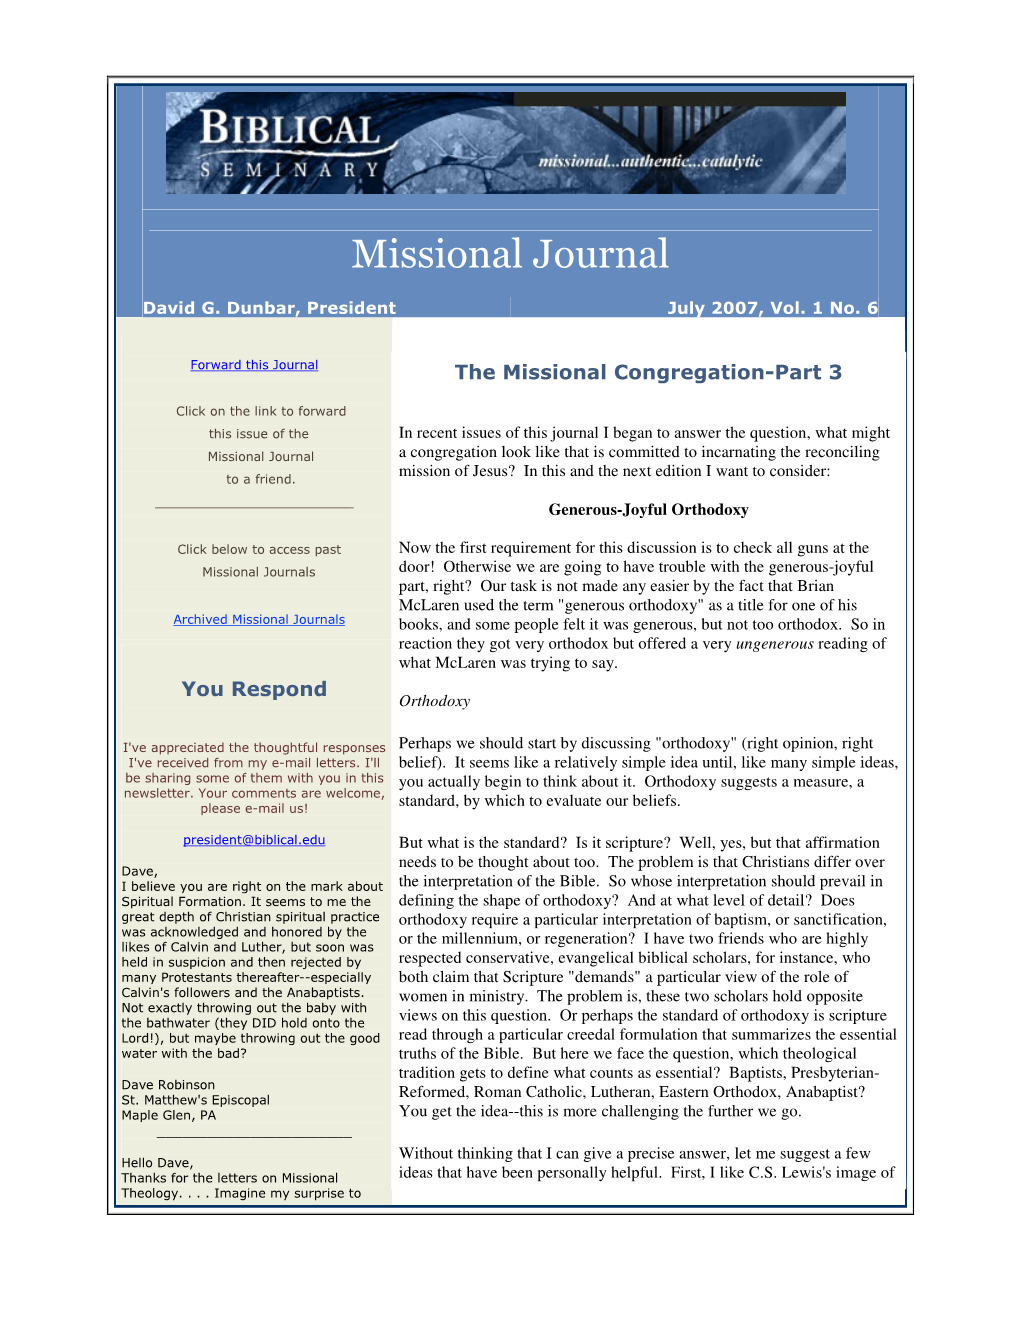 The Missional Congregation, Part 3